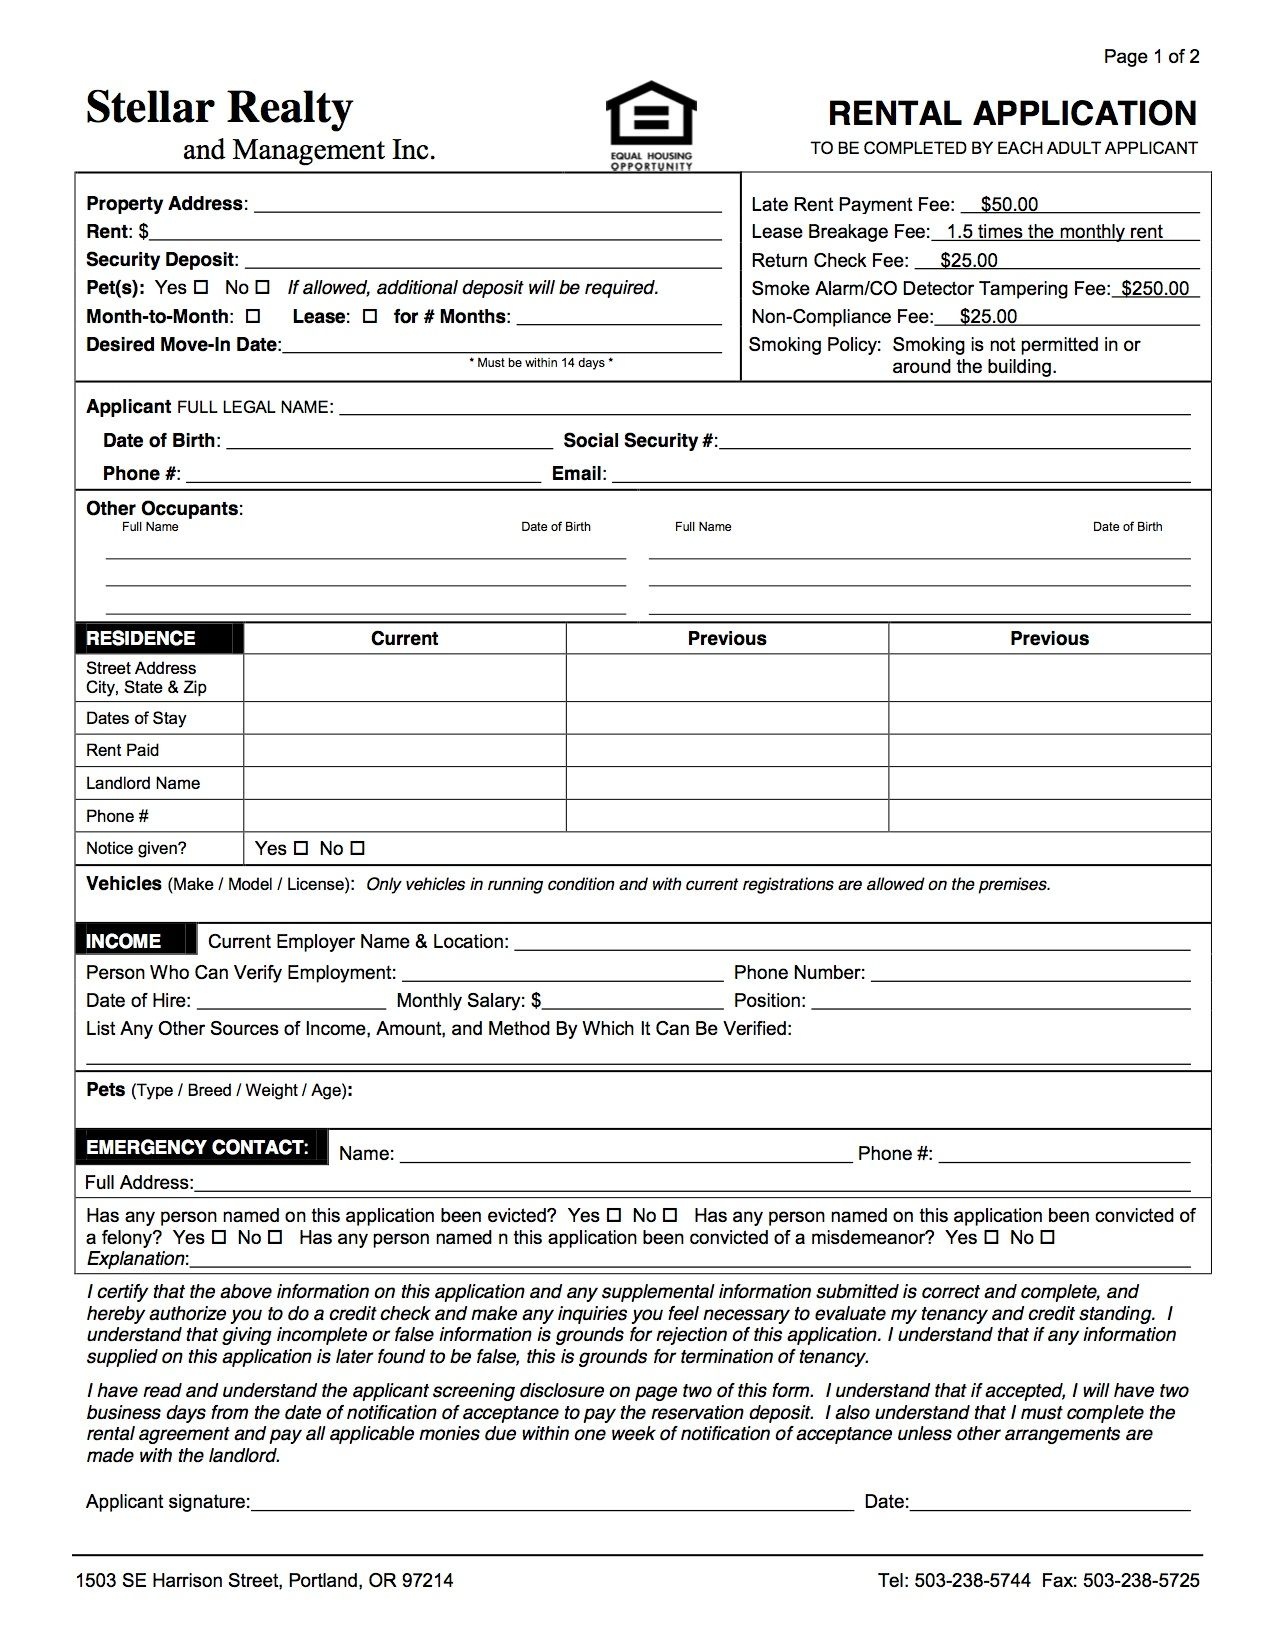 rental-application-form-free-printable-printable-forms-free-online